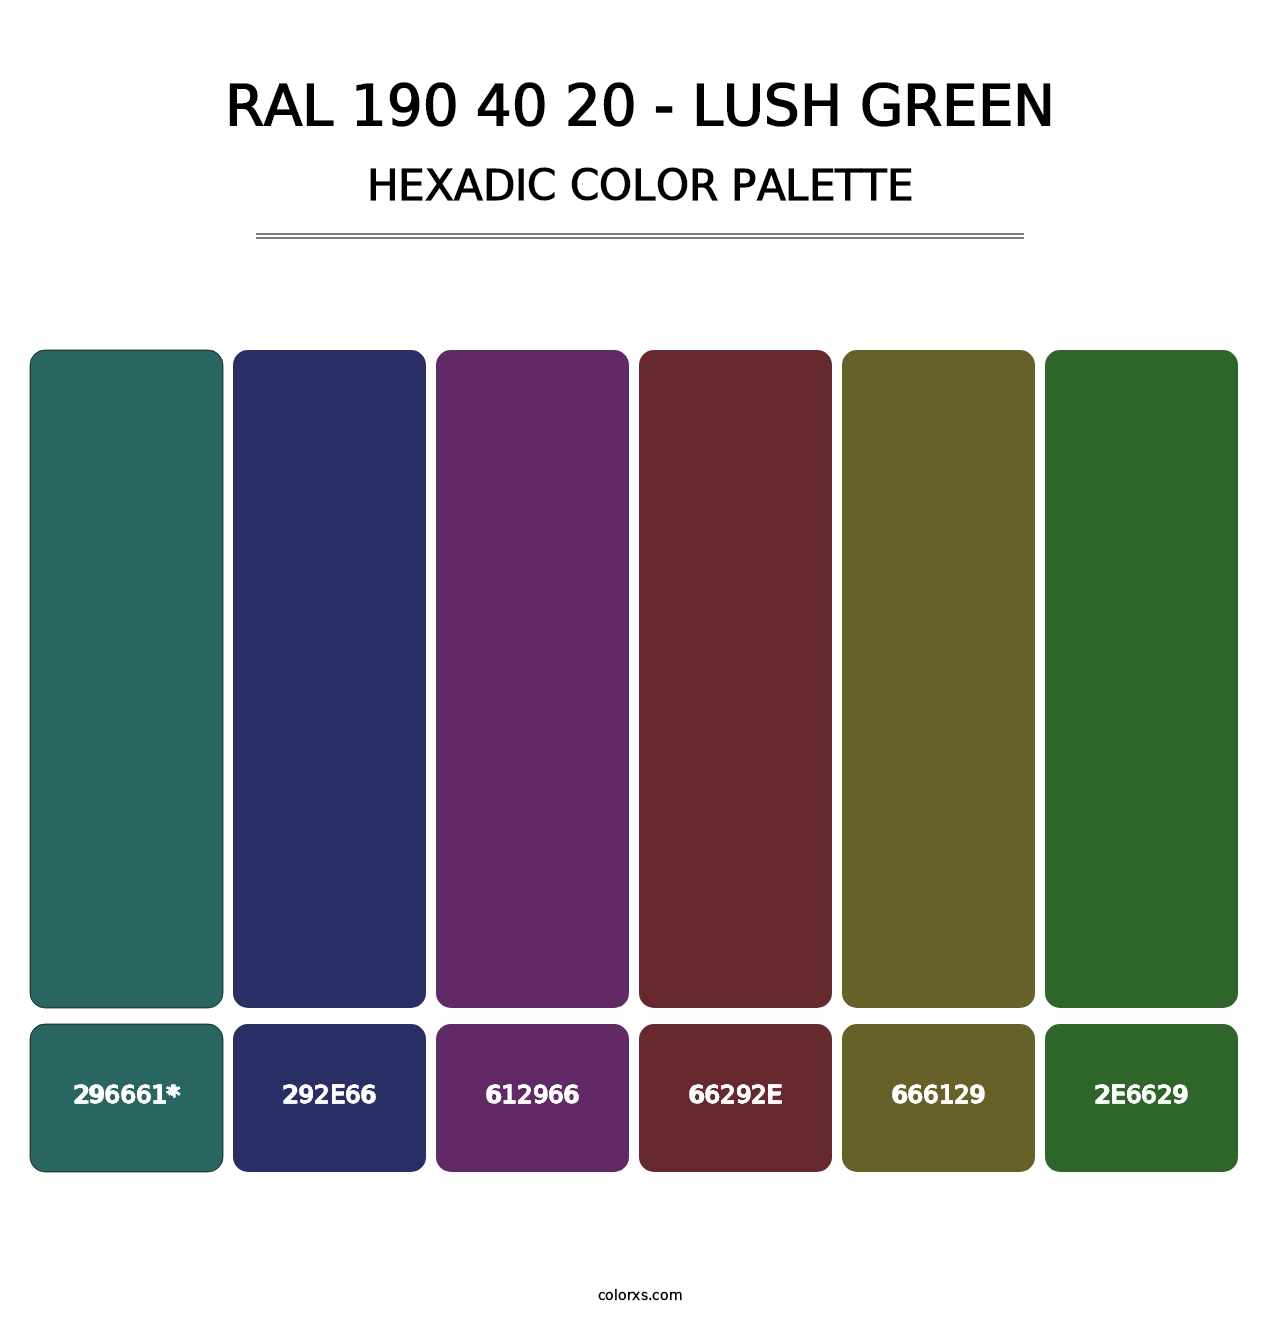 RAL 190 40 20 - Lush Green - Hexadic Color Palette